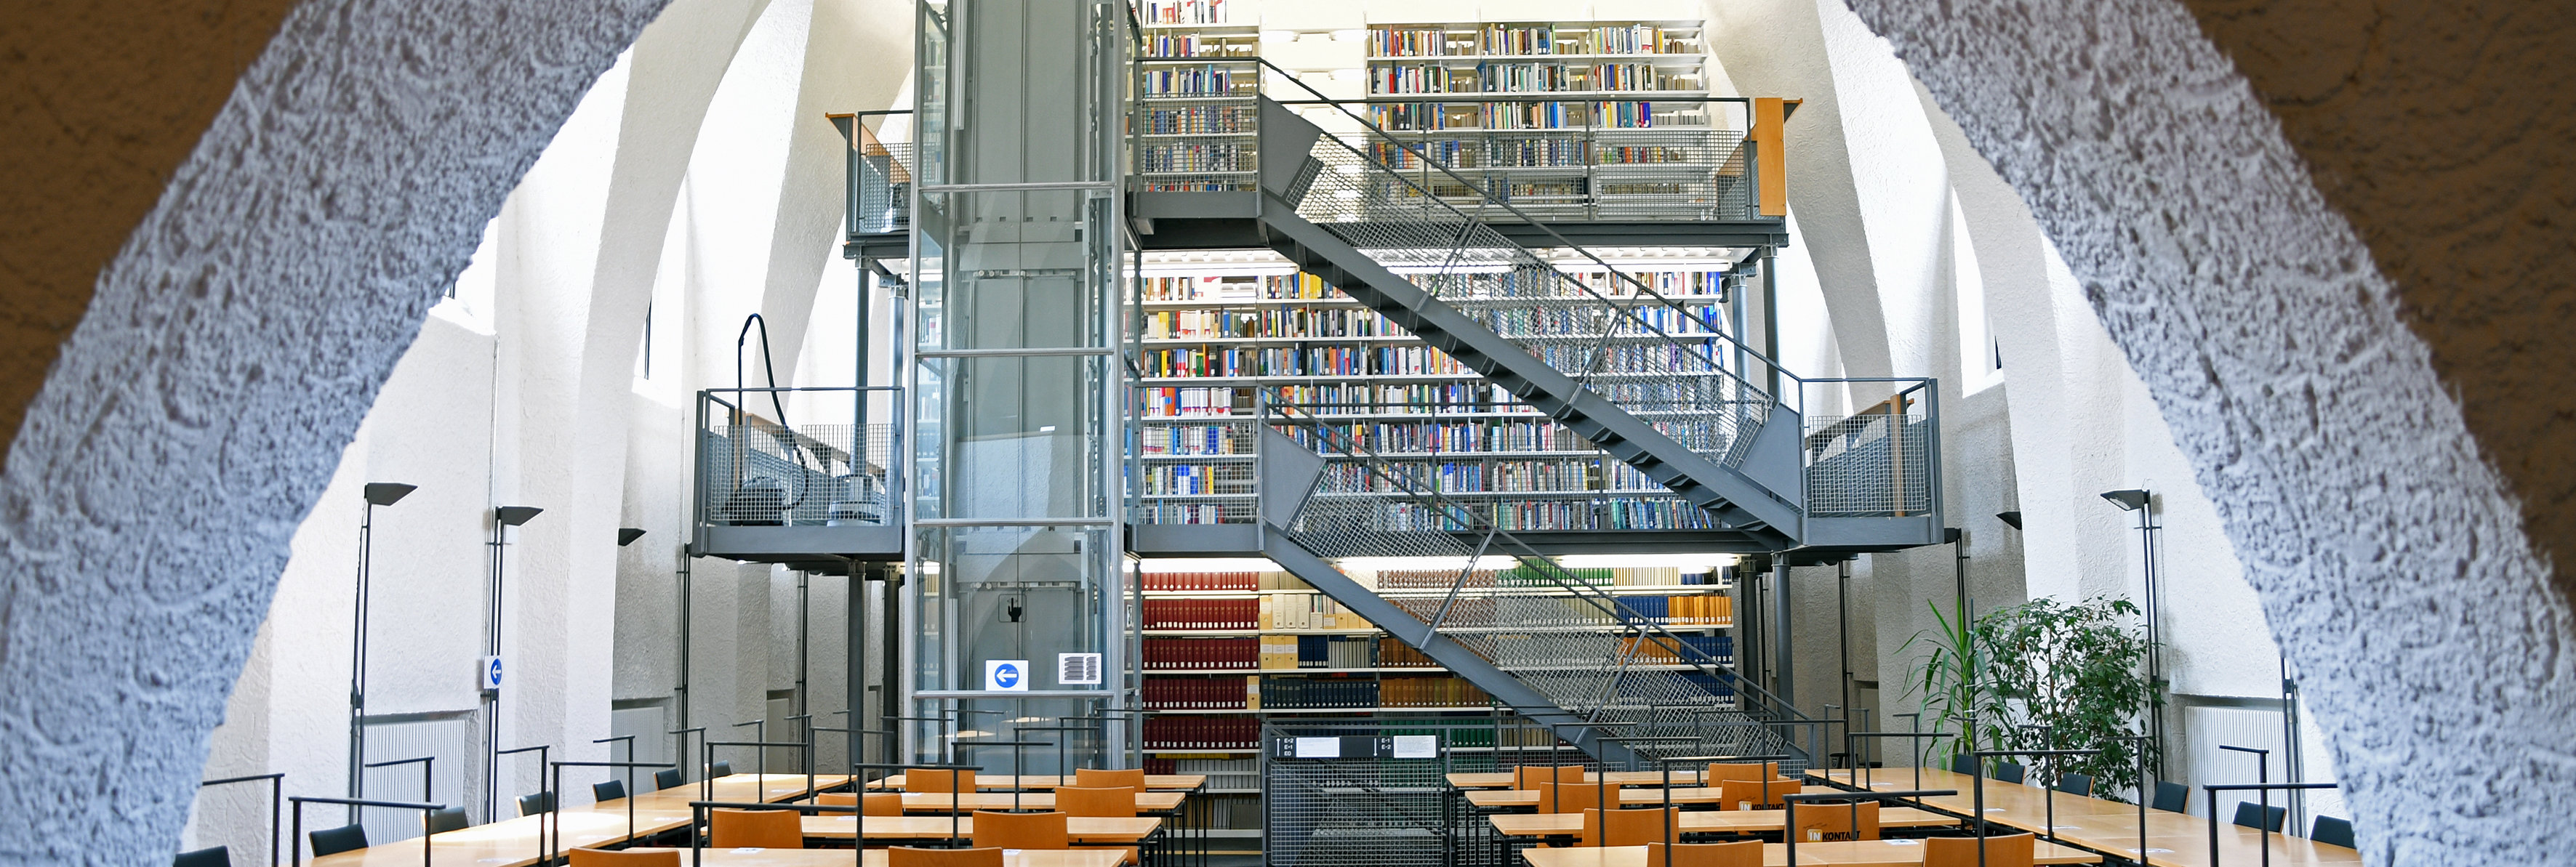 Universitätsbibliothek Eichstätt-Ingolstadt: Zweigbibliothek Ingolstadt, Lesesaal